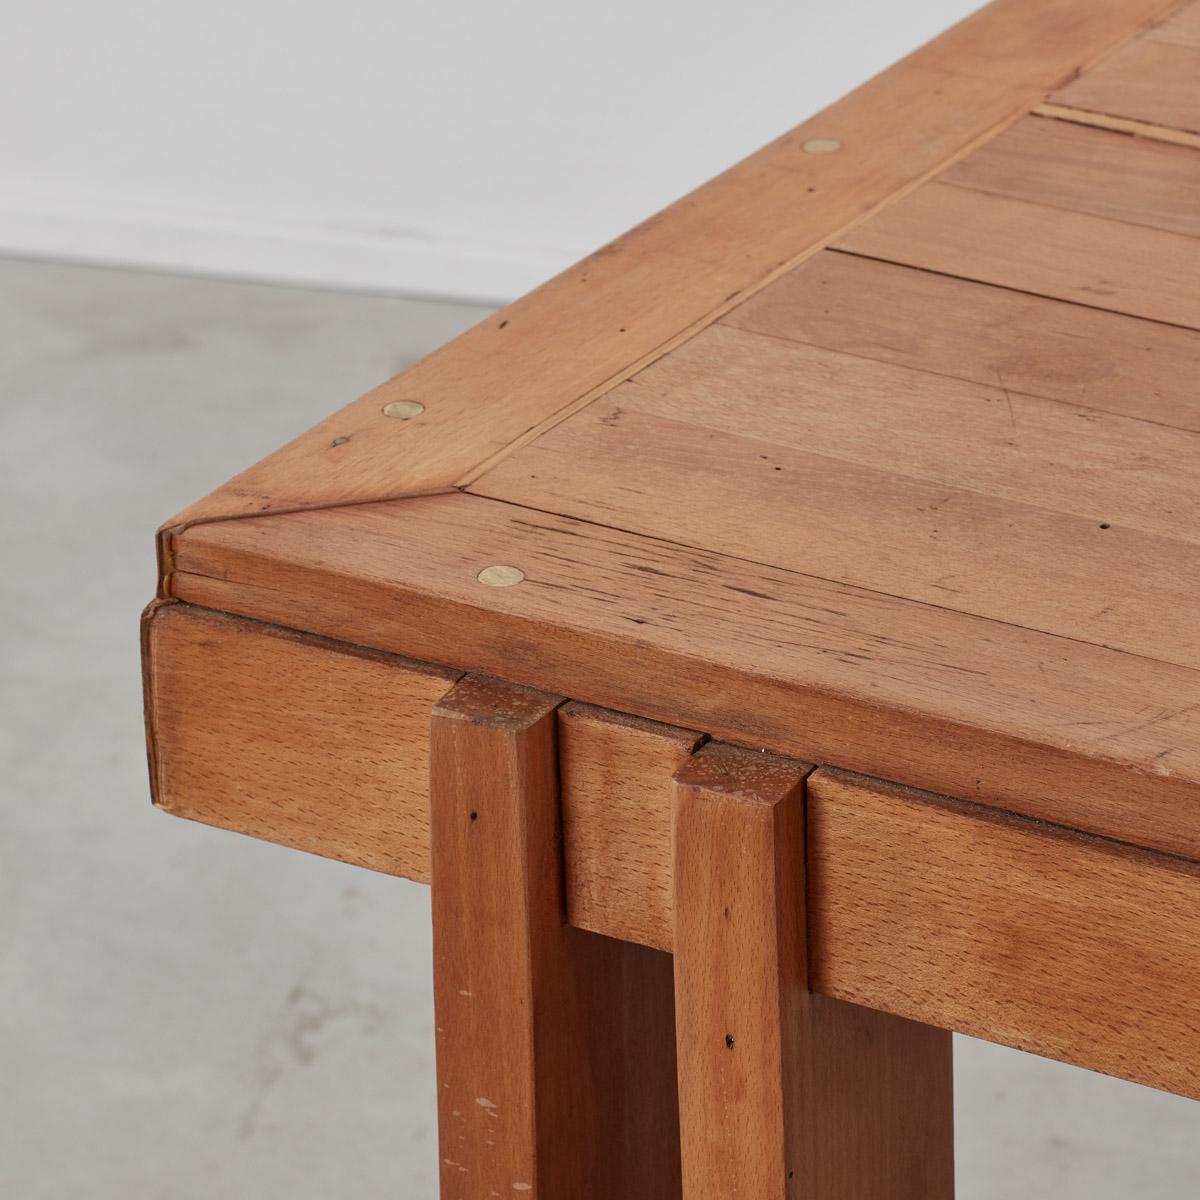 Wood Constructivist Oak Tables or Desks, Italy, 1950s